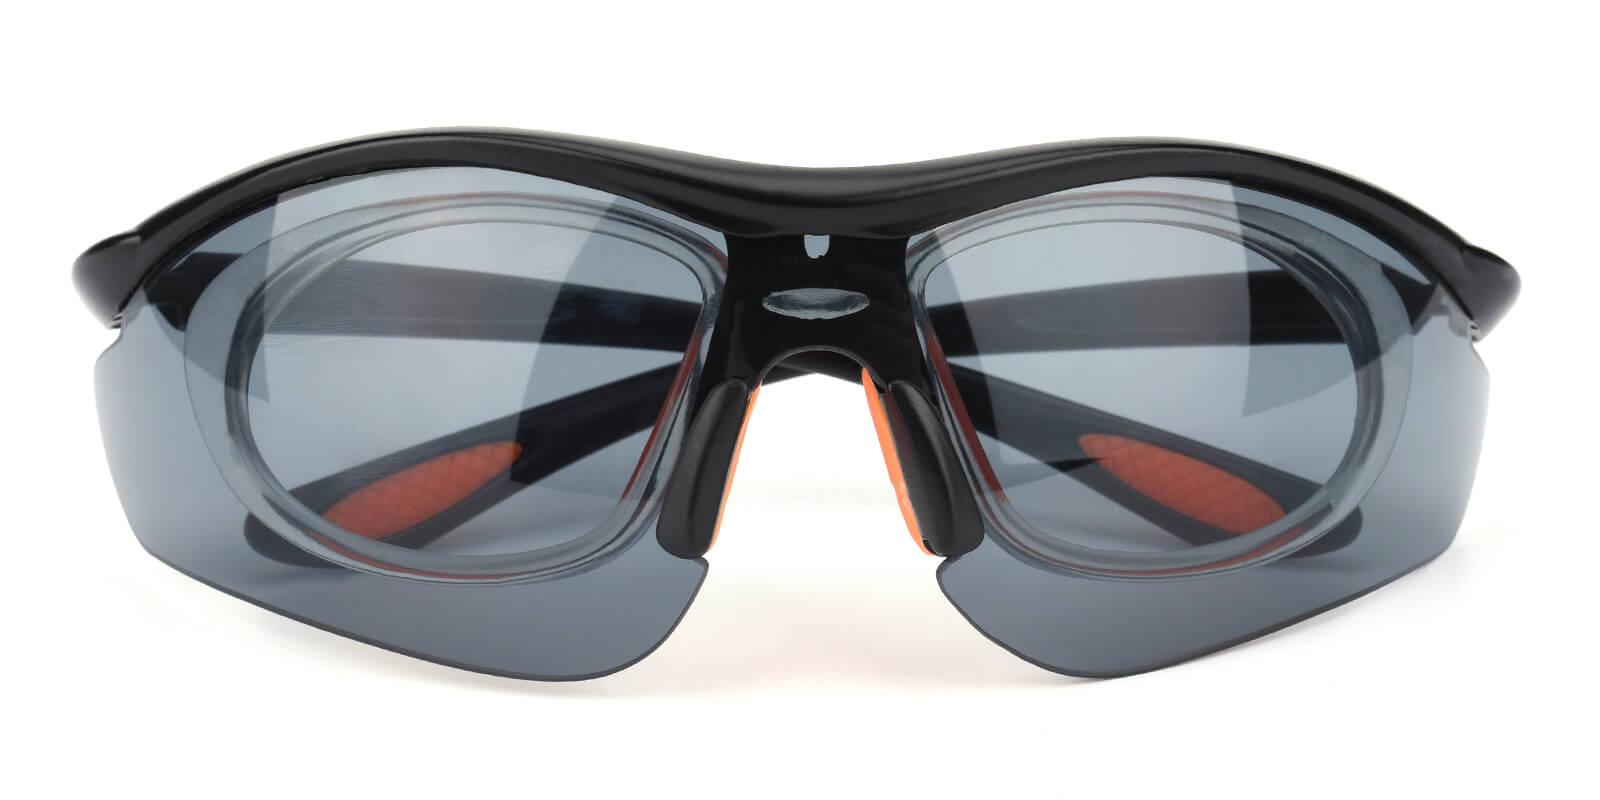 Preavey-Black-Square-Plastic-SportsGlasses-detail